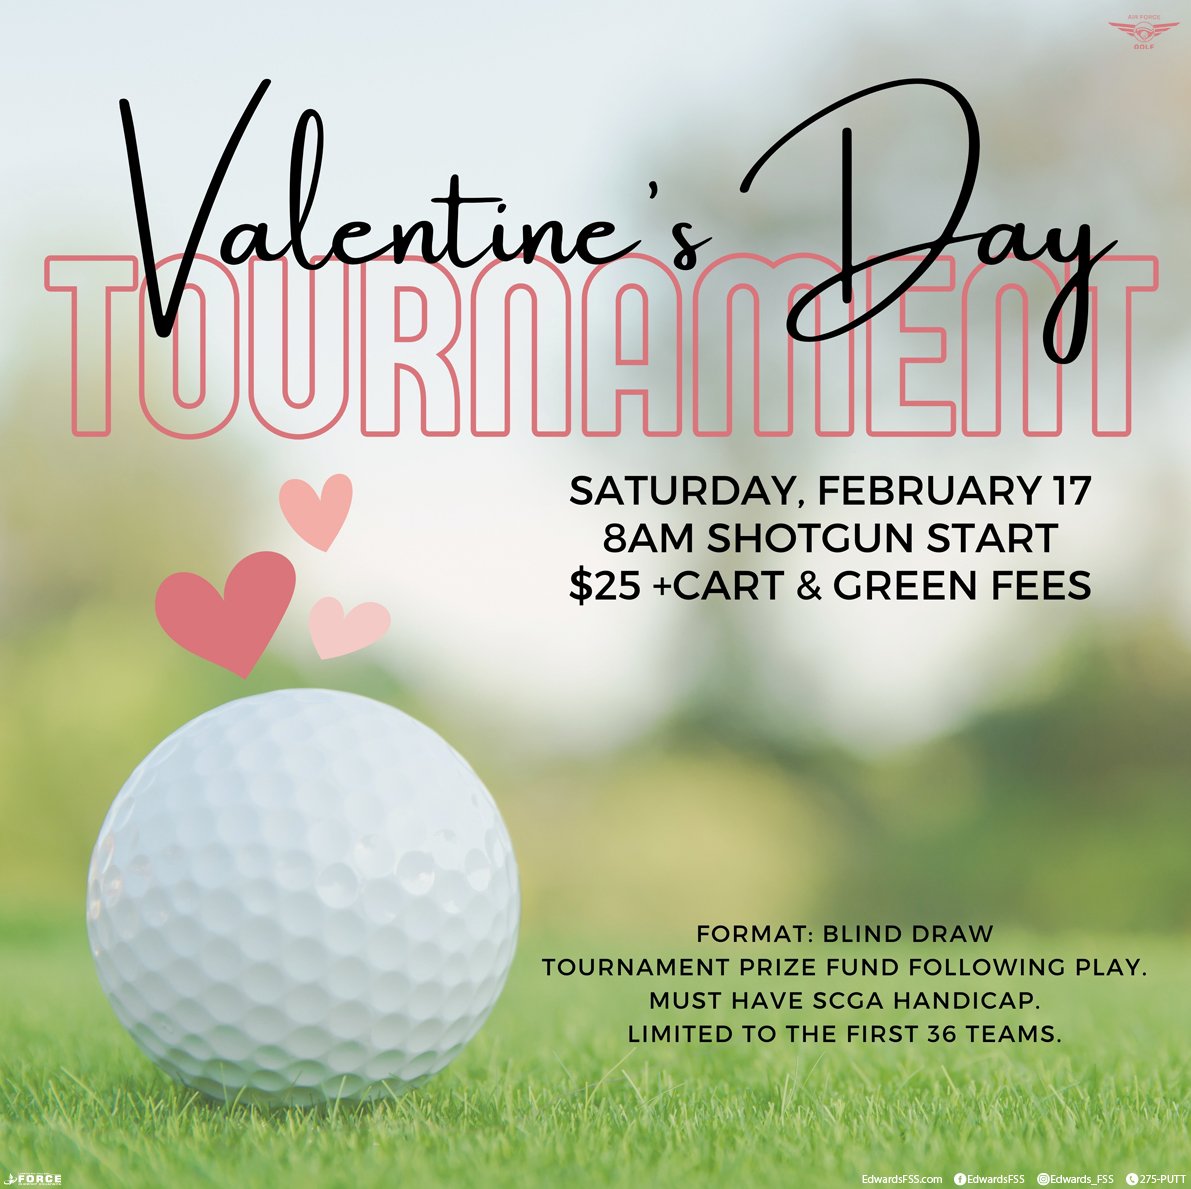 Valentines Tournament Golf